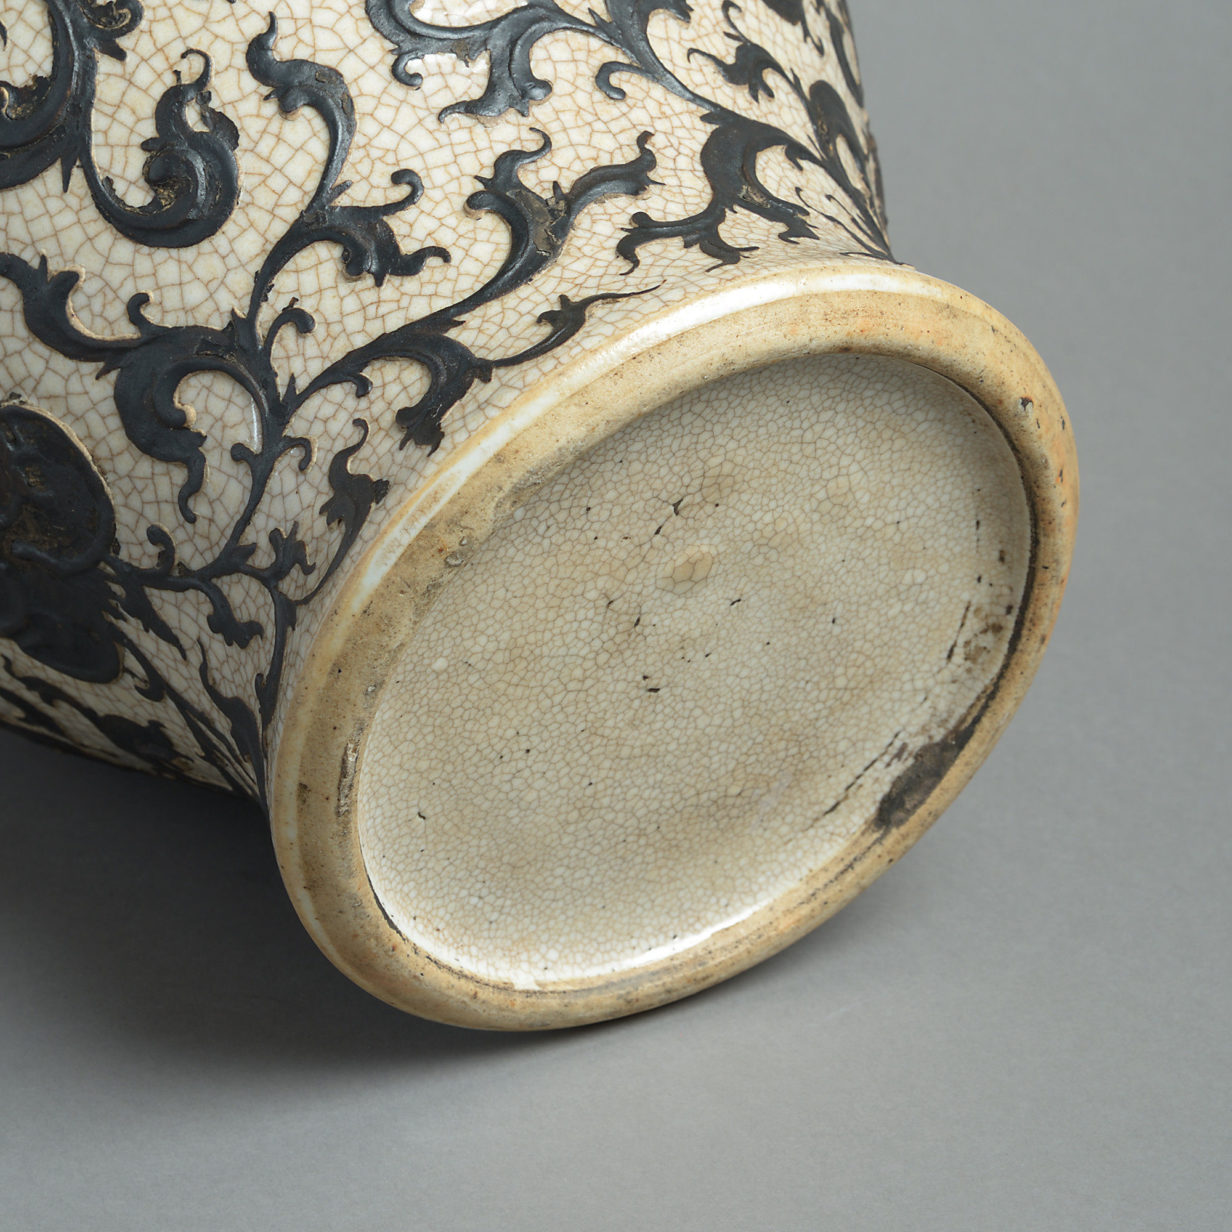 19th century crackleware baluster vase